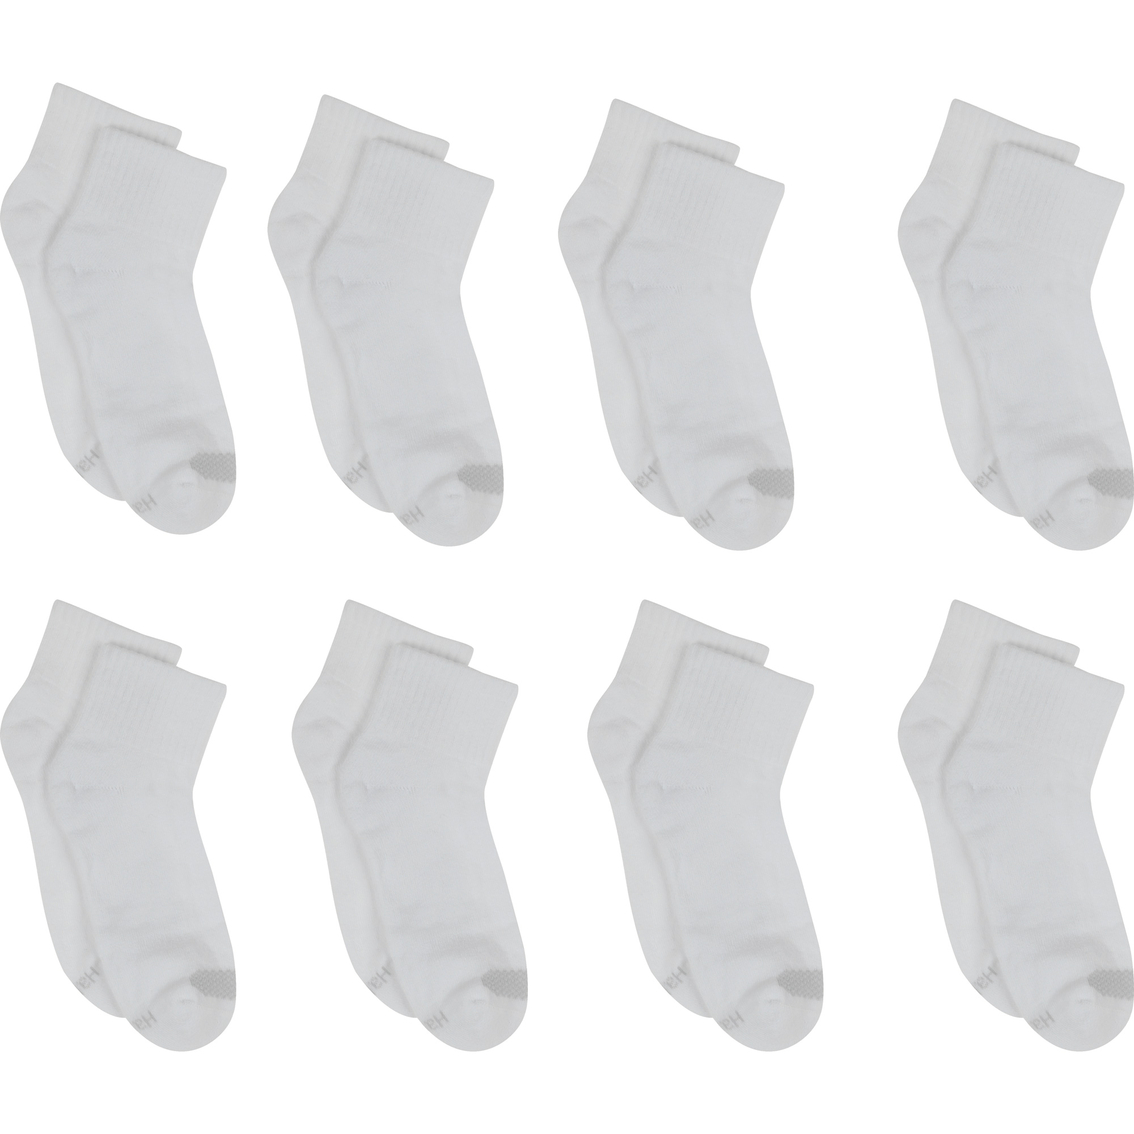 Hanes Cushion Ankle Socks 8 pk. - Image 2 of 2